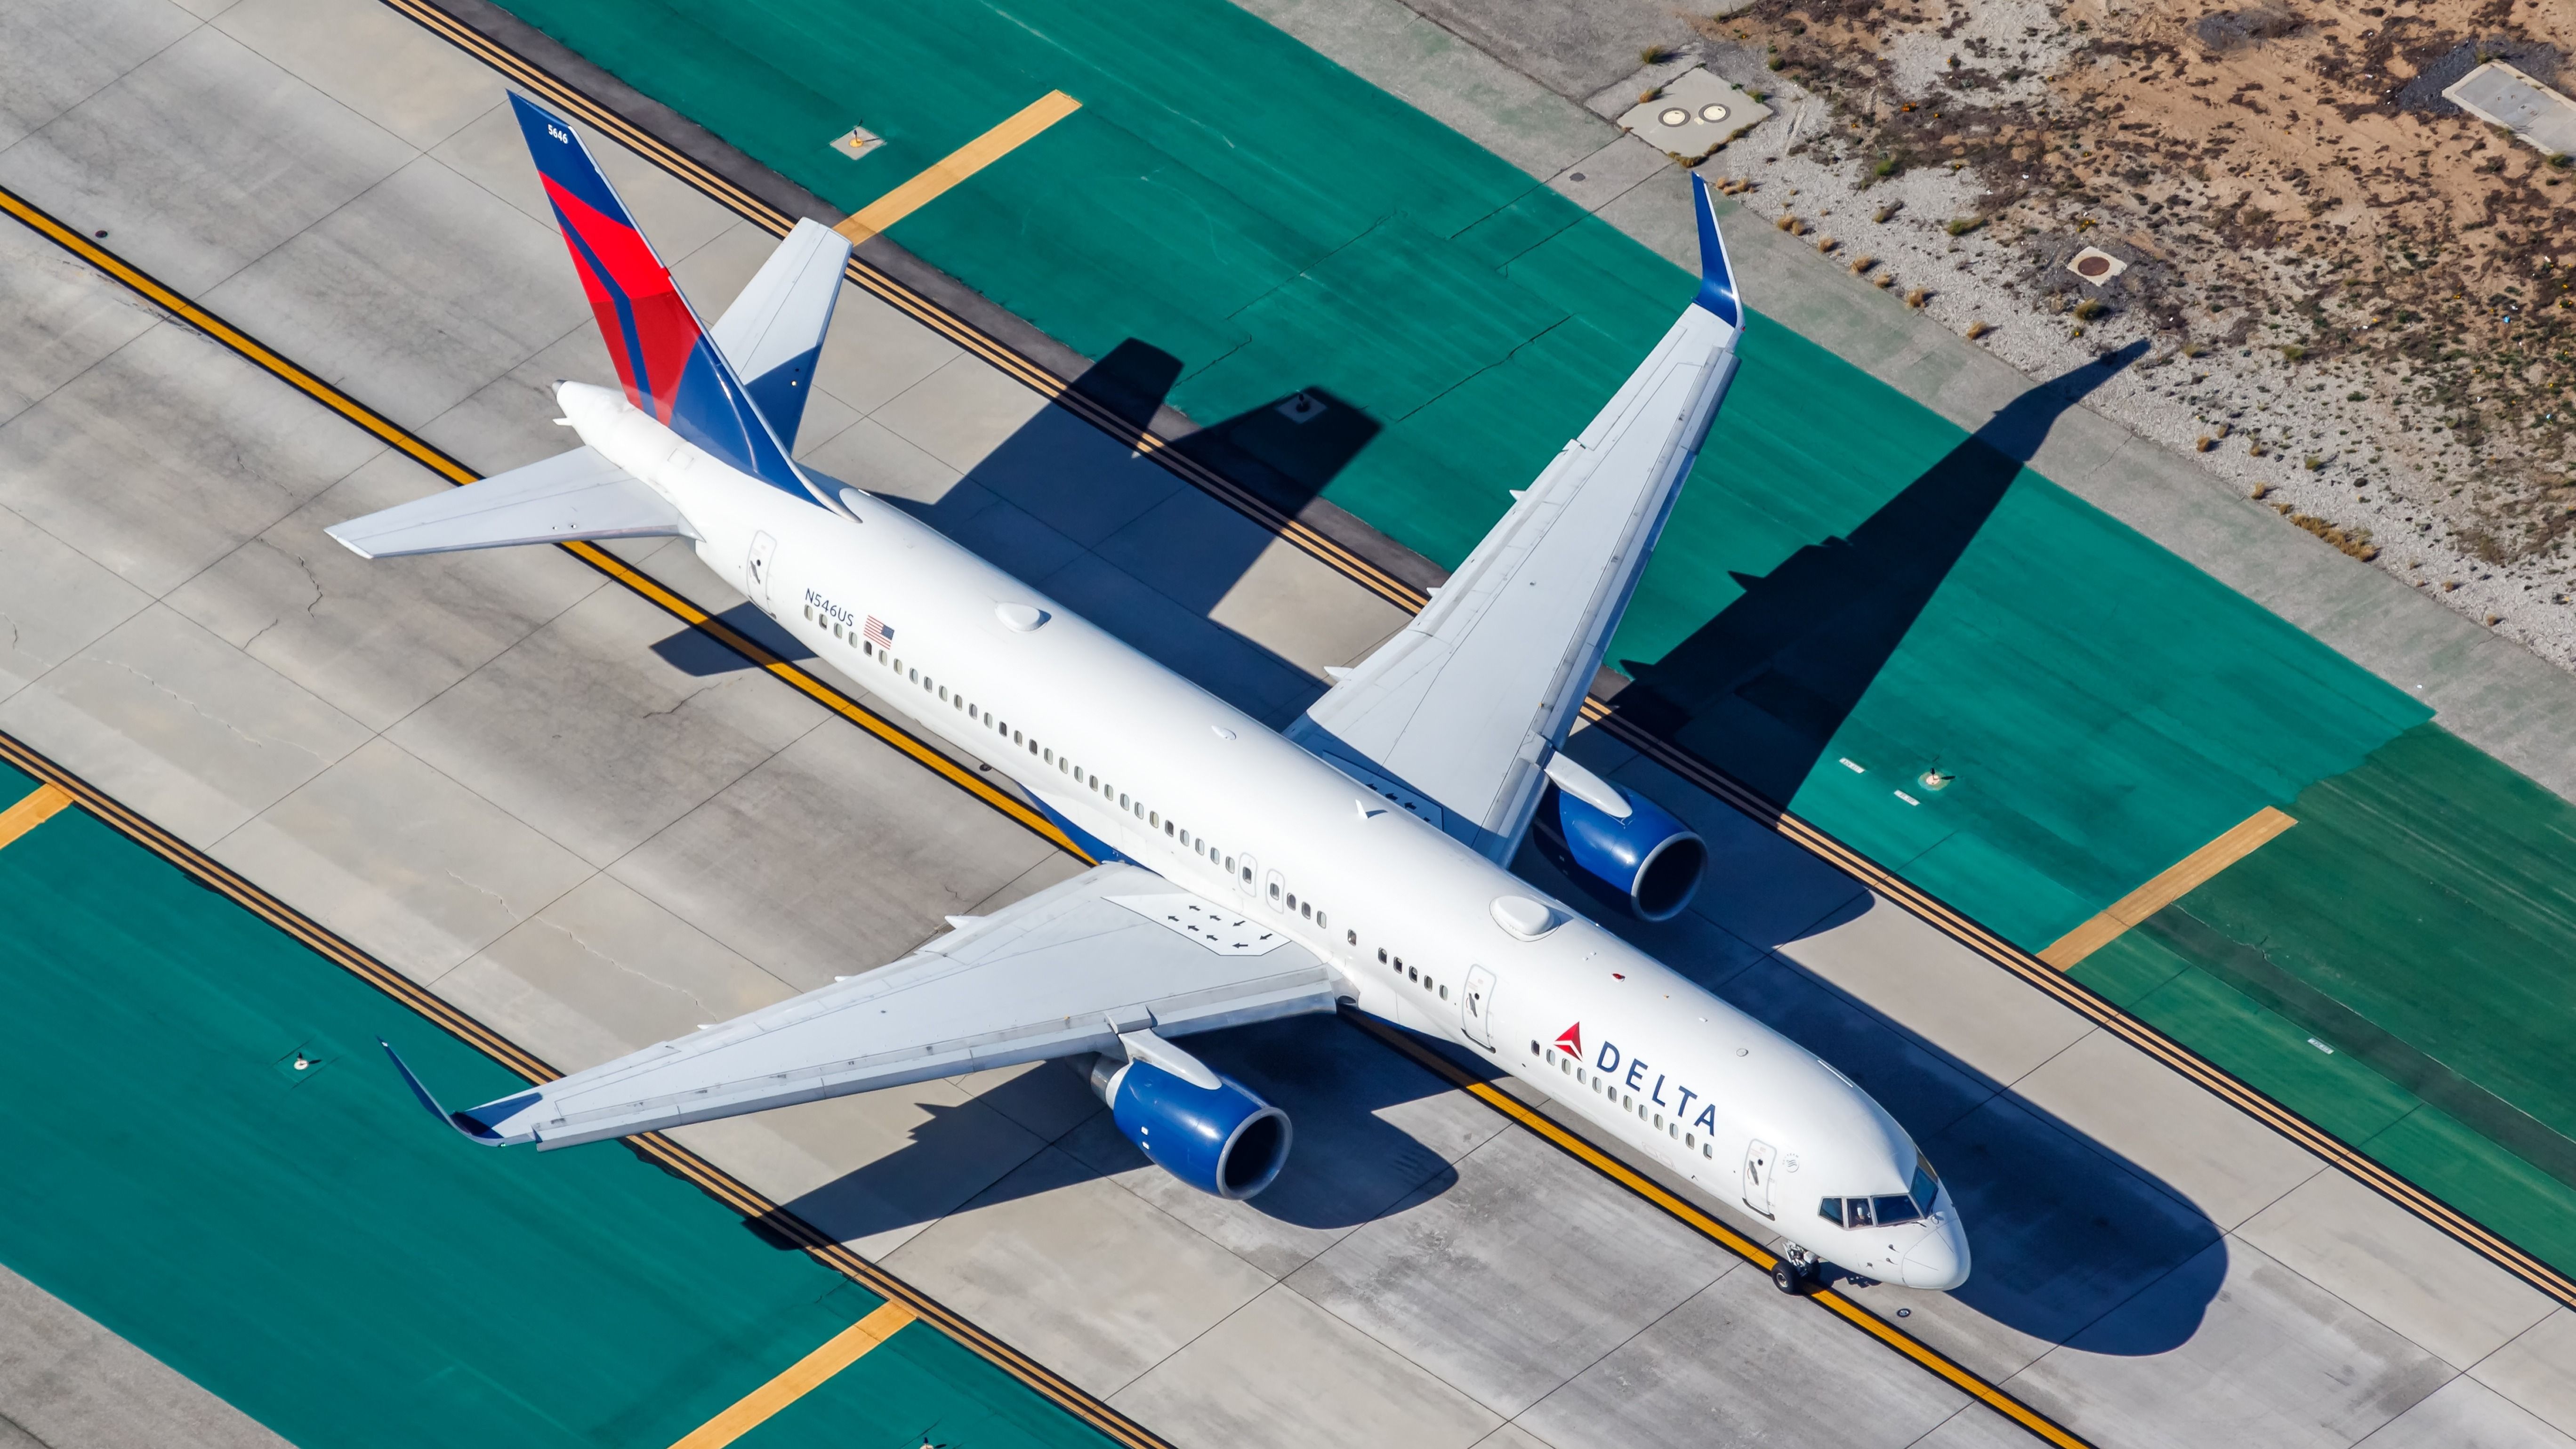 Delta Air Lines Boeing 757